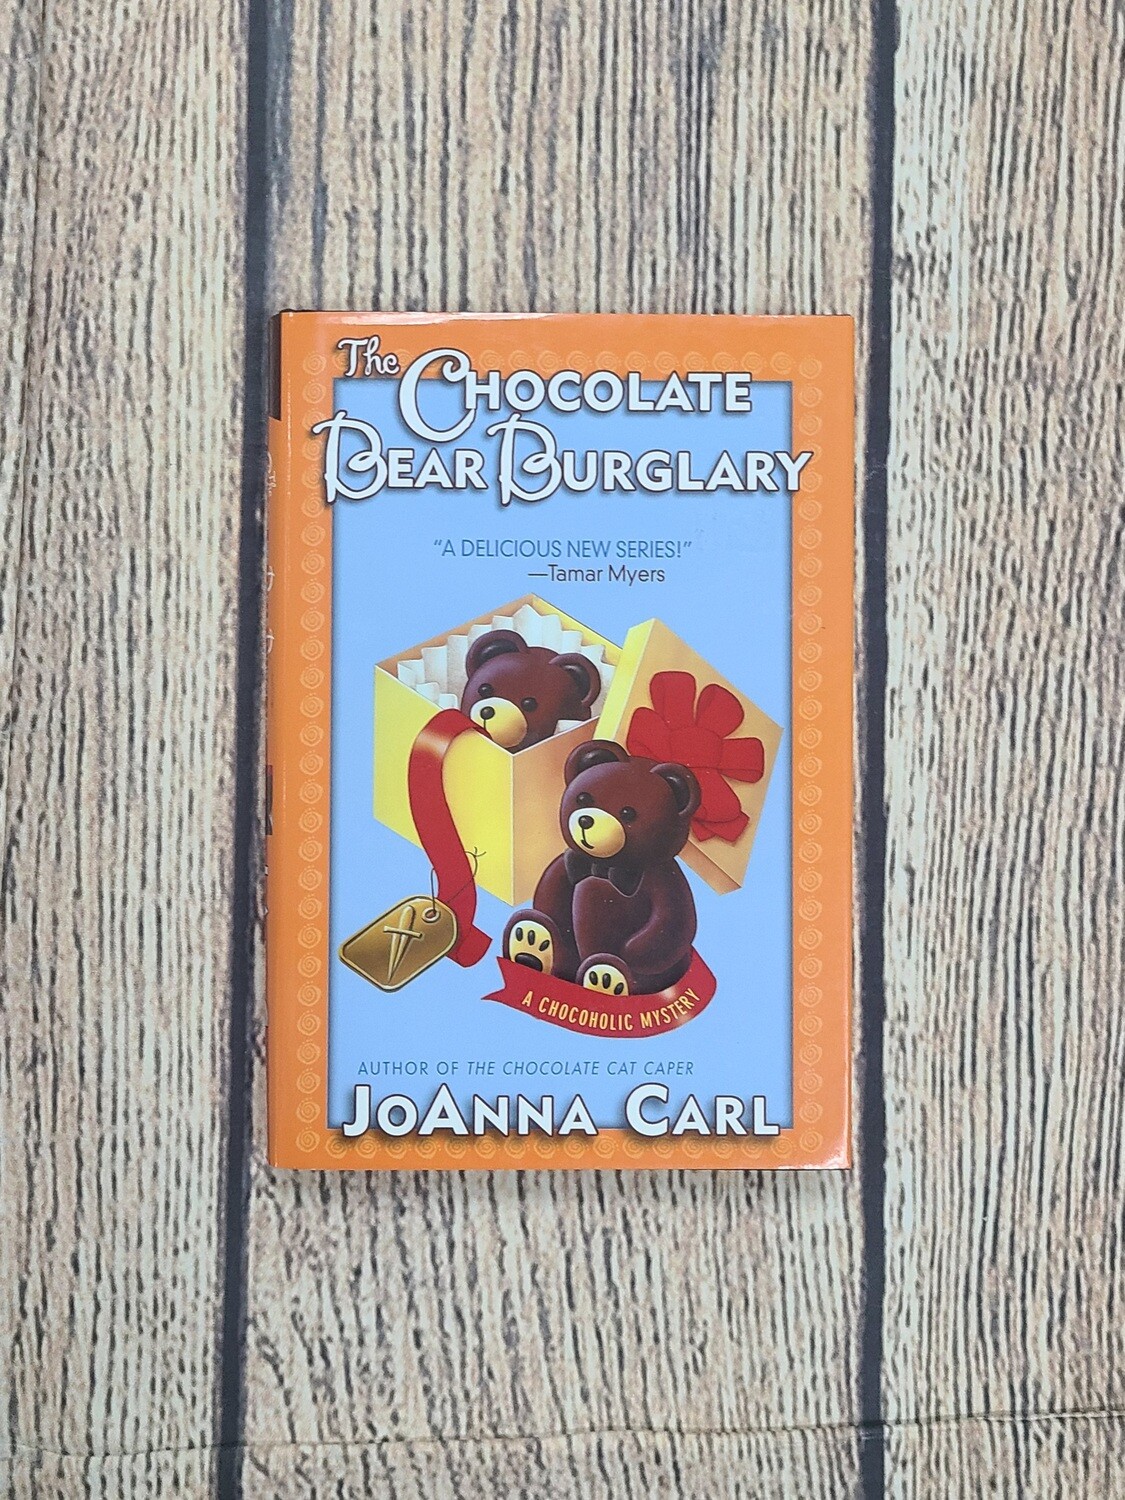 The Chocolate Bear Burglary by JoAnna Carl